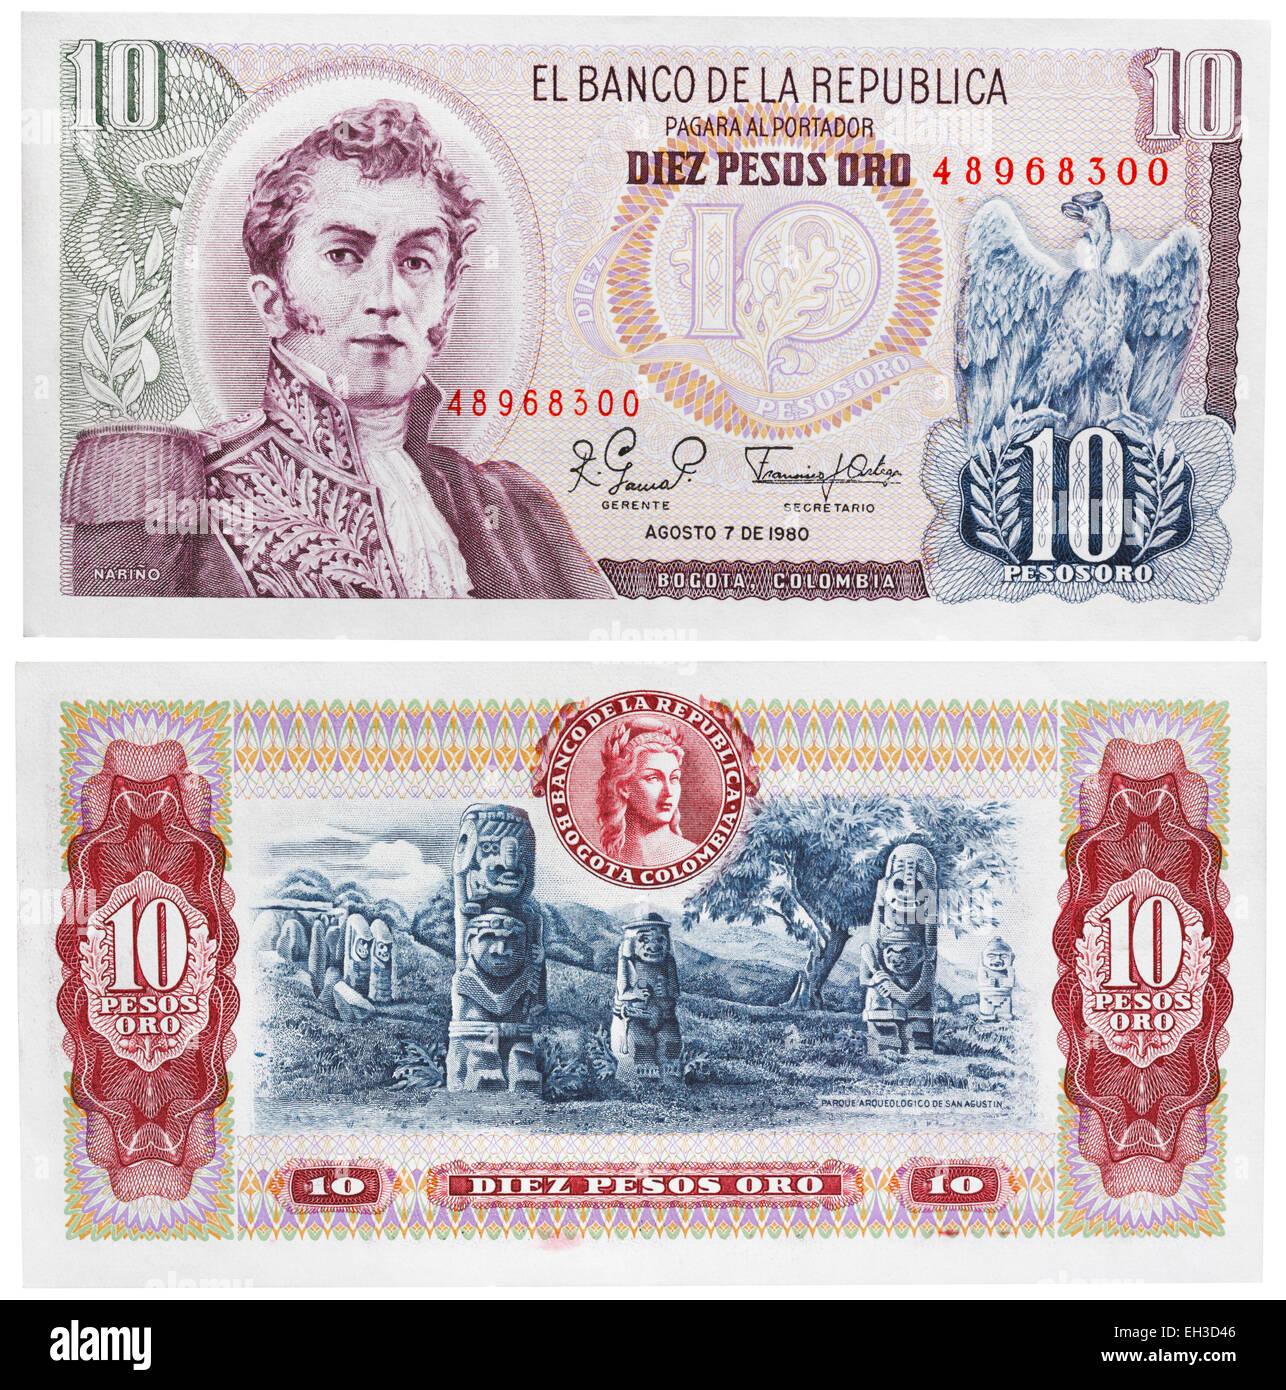 10 pesos oro banknote, Antonio Narino, Colombia, 1980 Stock Photo